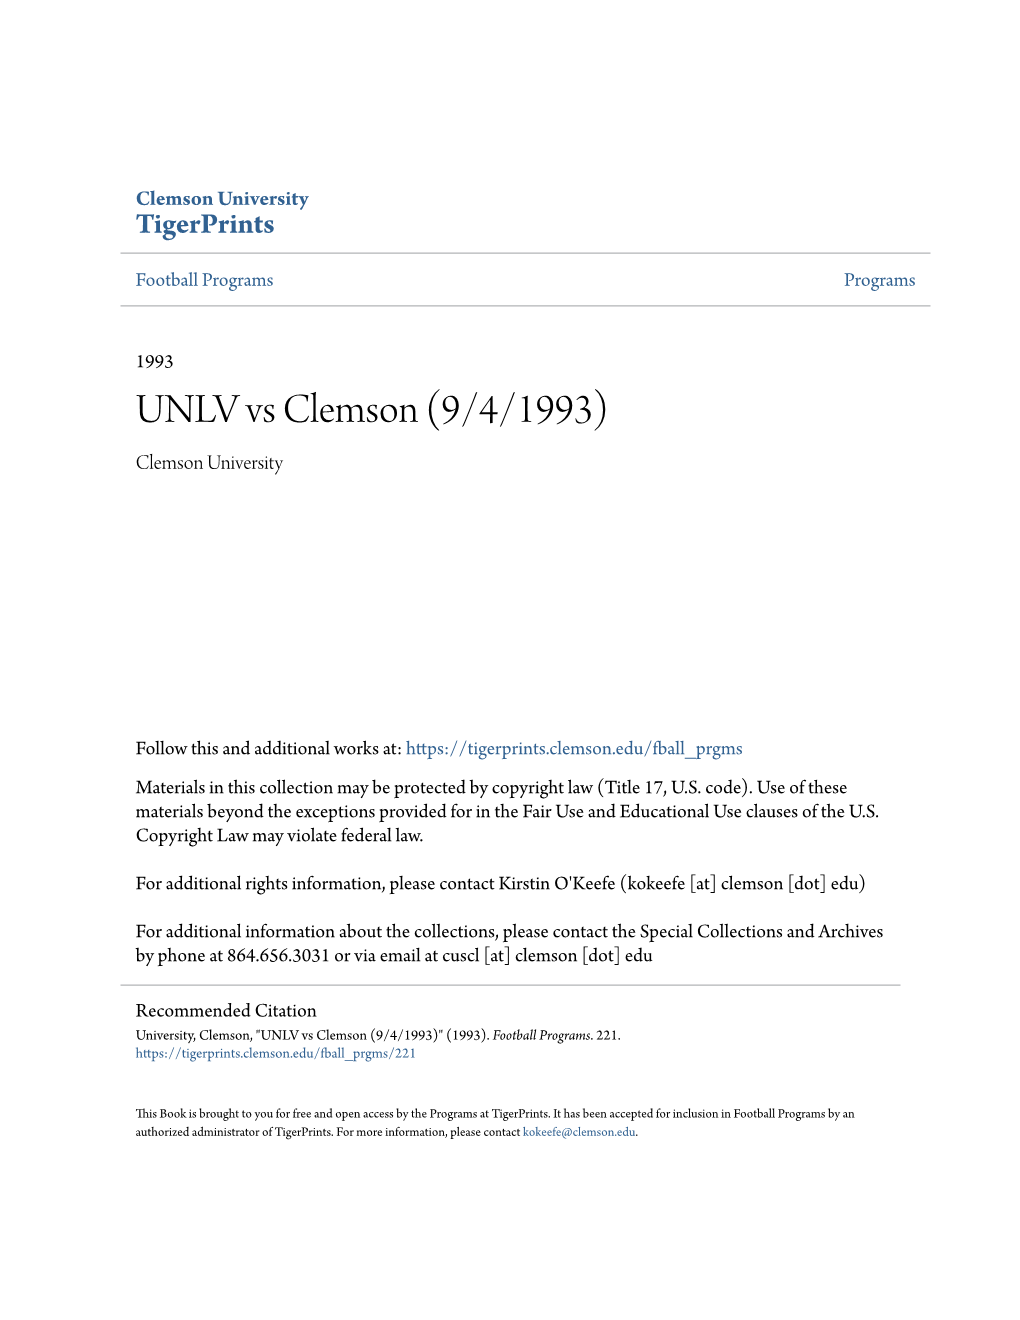 UNLV Vs Clemson (9/4/1993) Clemson University